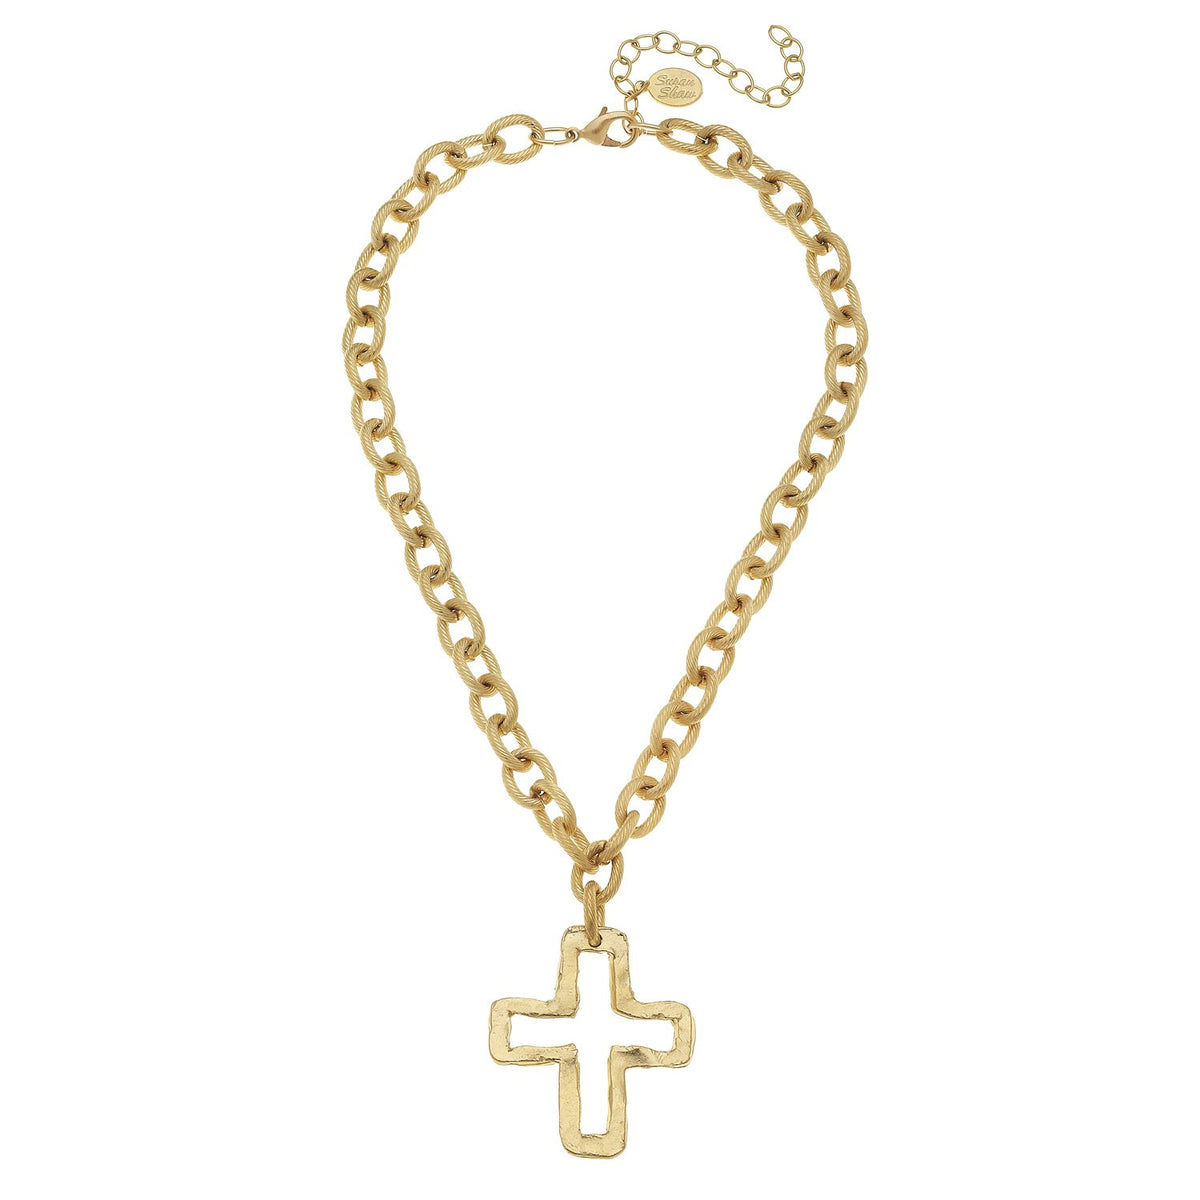 Brilliance Fine Jewelry Gold-Filled Cross Pendant, 24